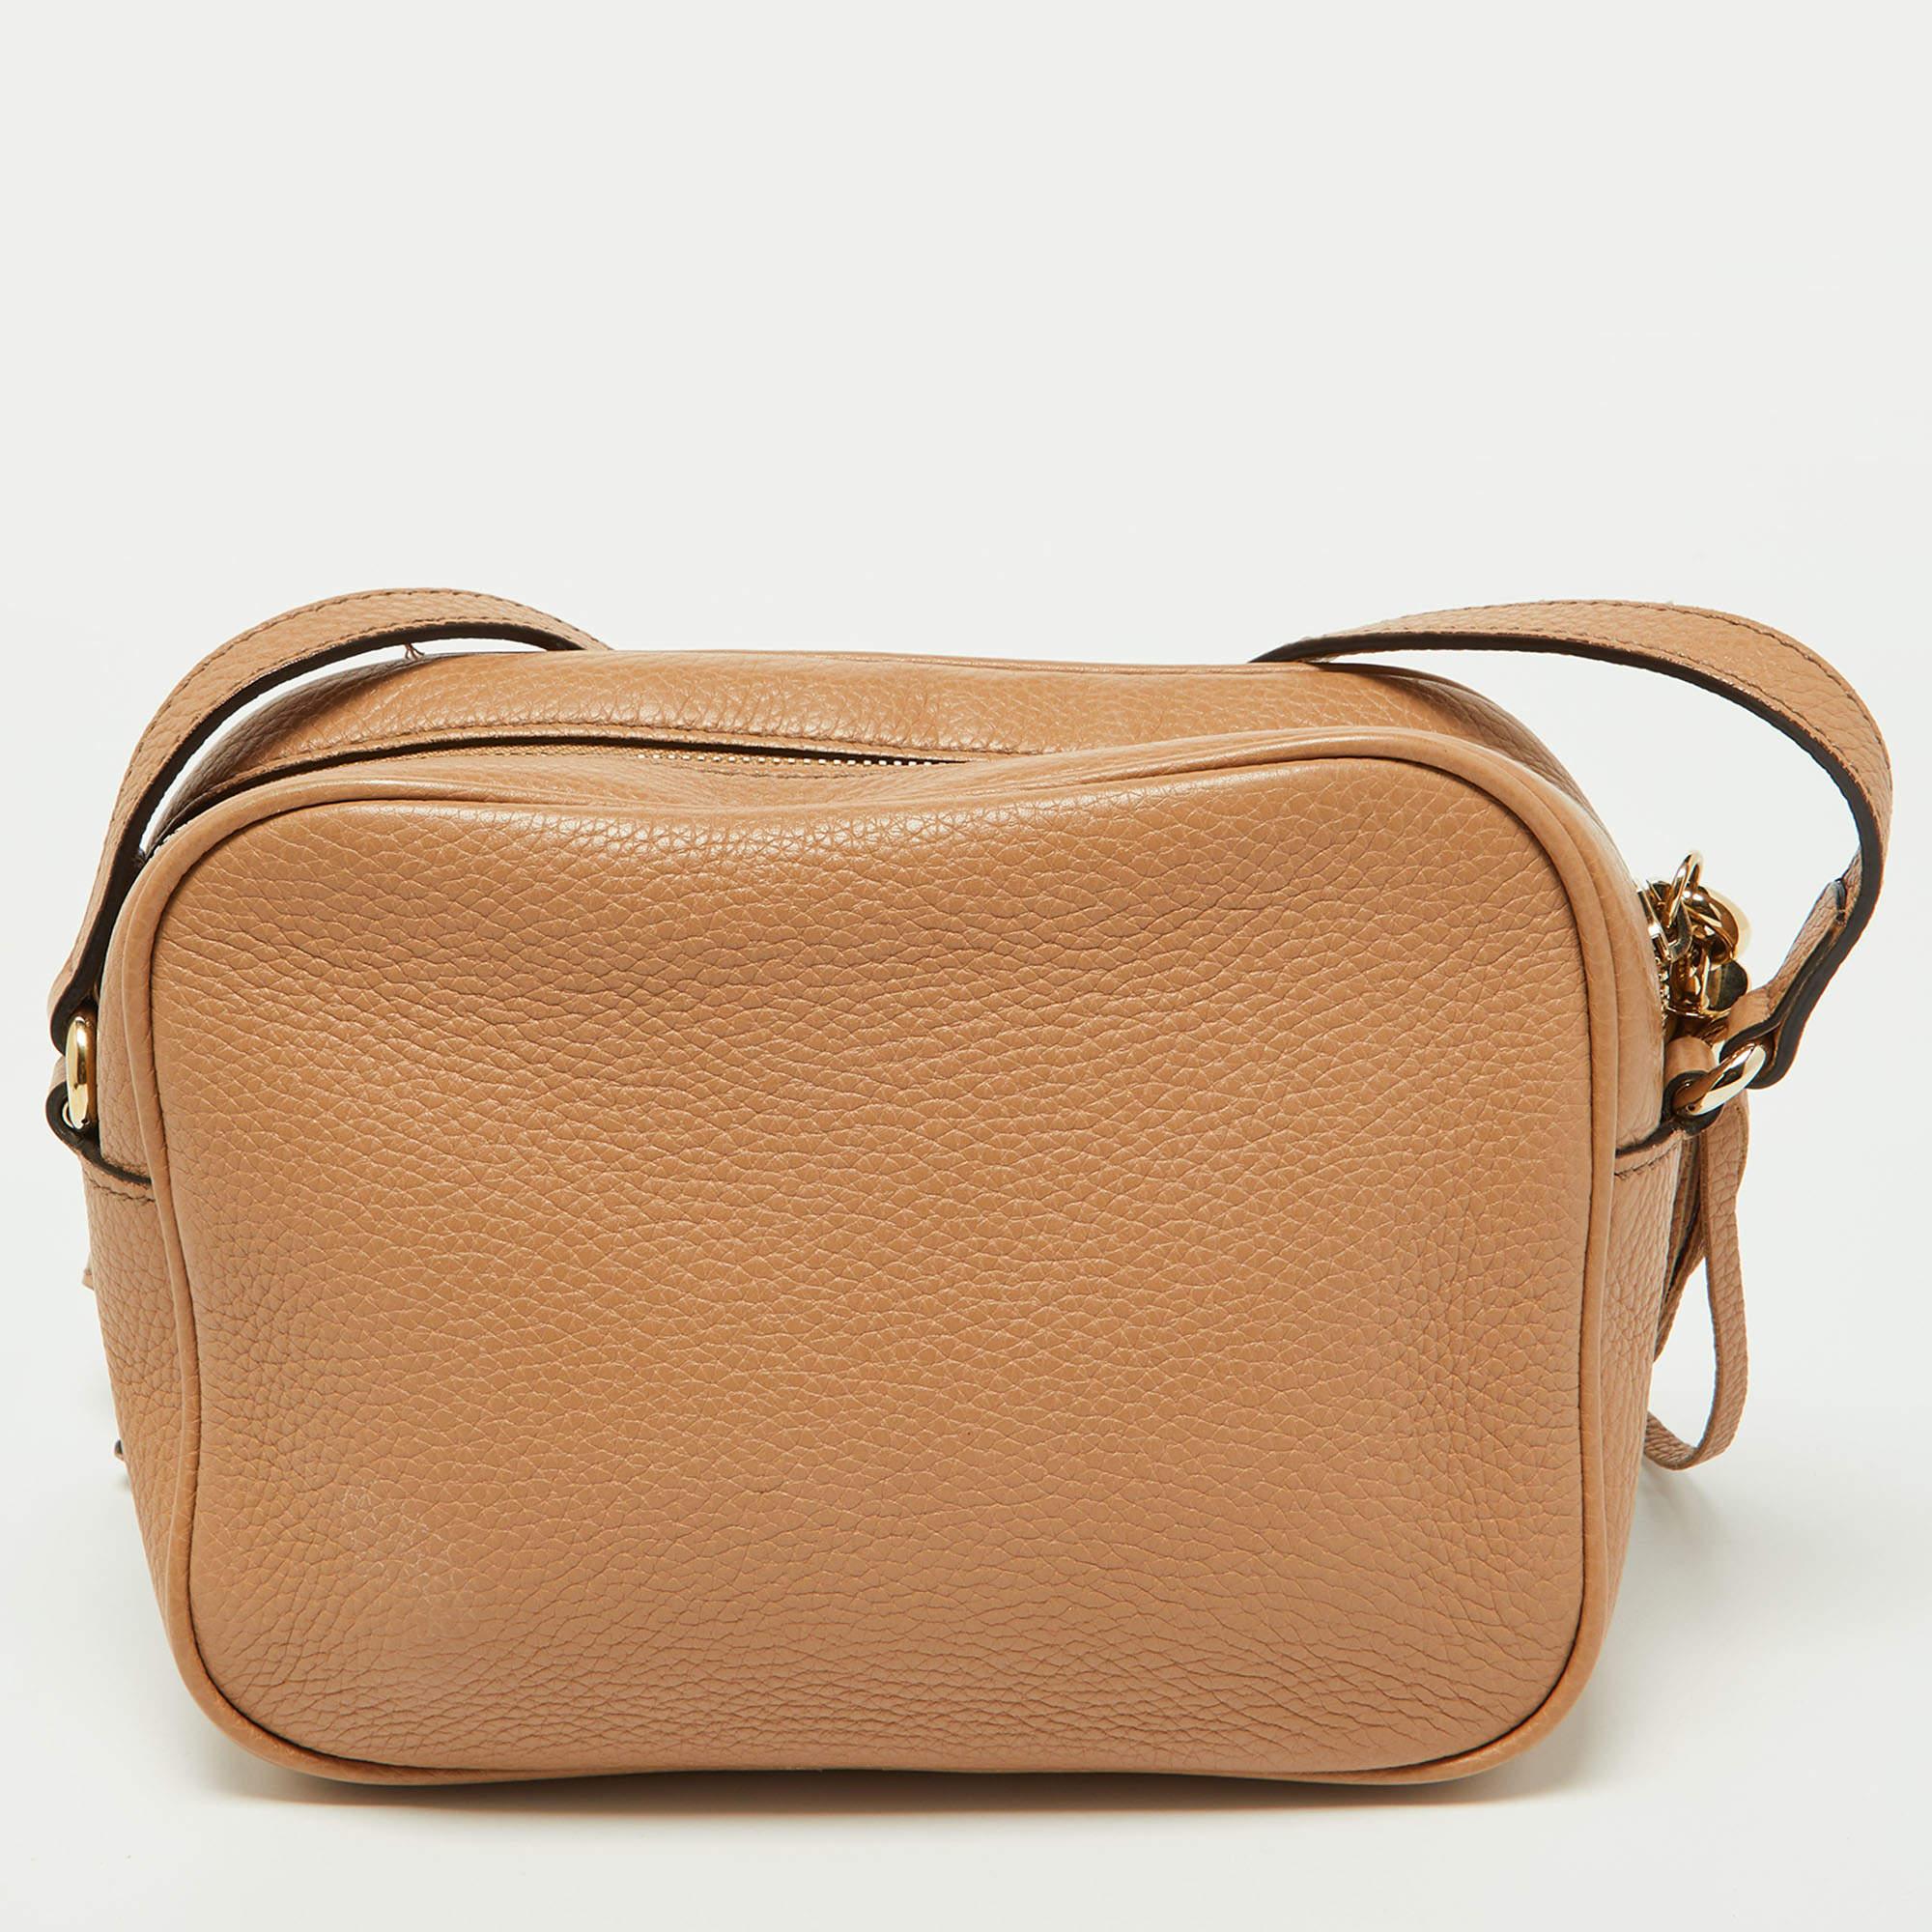 Gucci Beige Leather Small Soho Disco Shoulder Bag 5